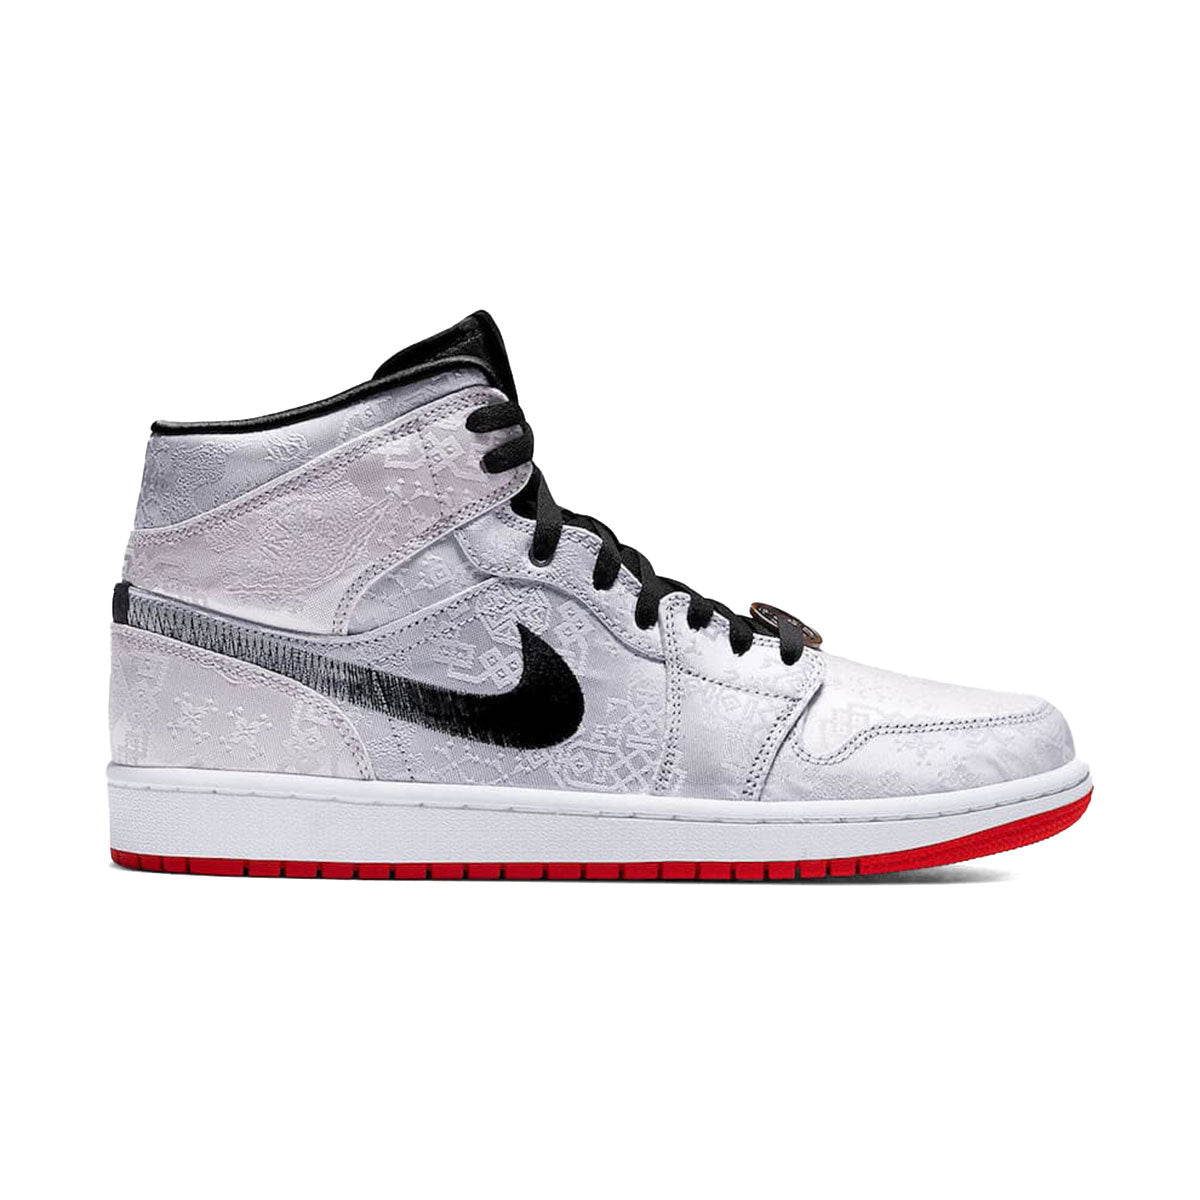 NIKE AIR JORDAN 1 MID SE FRLS GC (WHITE / BLACK - WHITE) Nike Air Jordan 1 Mid SE FRLS GC White / Black - White [CU2804-100]